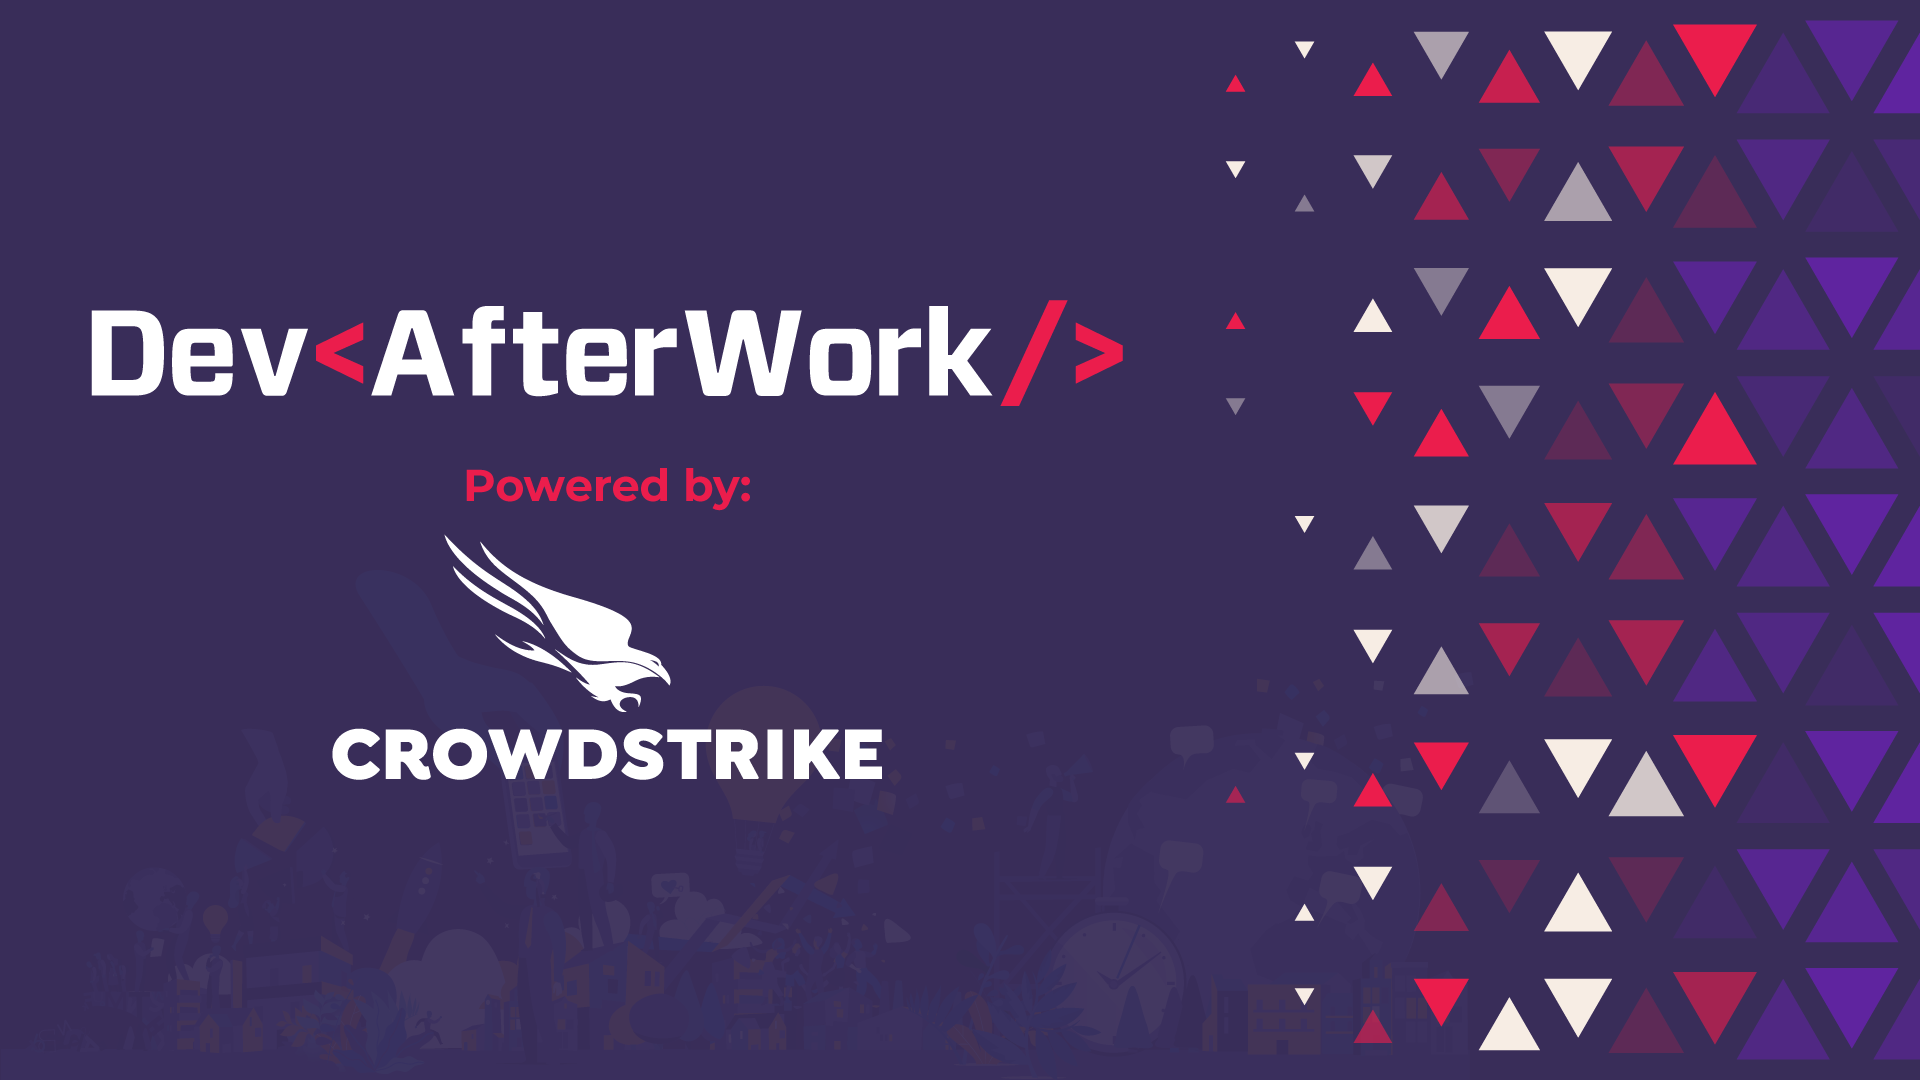 DevAfterWork powered by CrowdStrike Picture